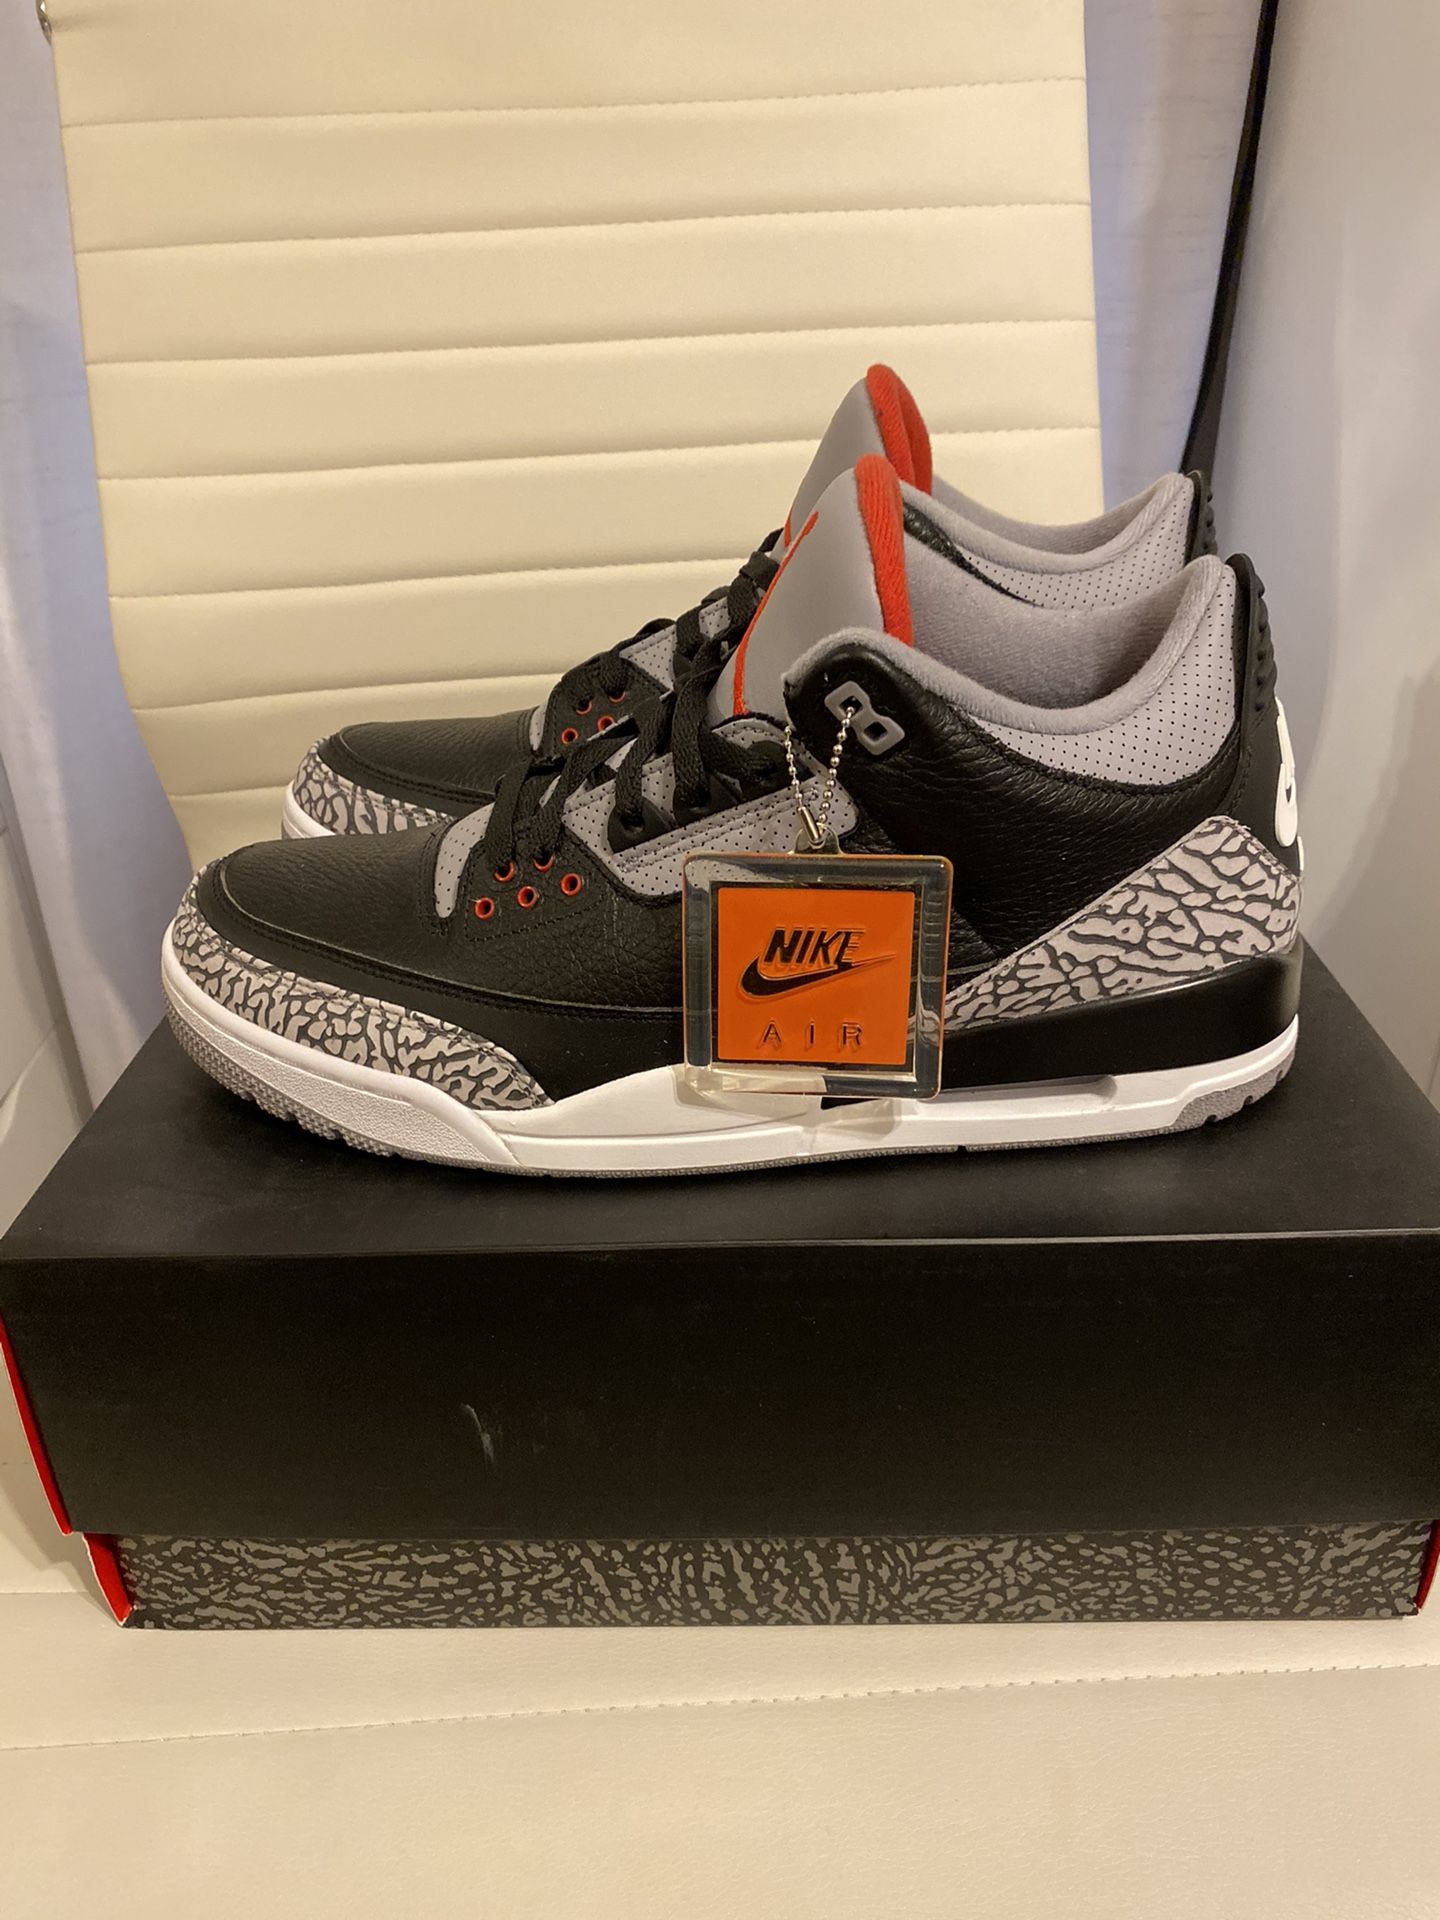 Nike Air Jordan Retro 3 size 13 100% authentic